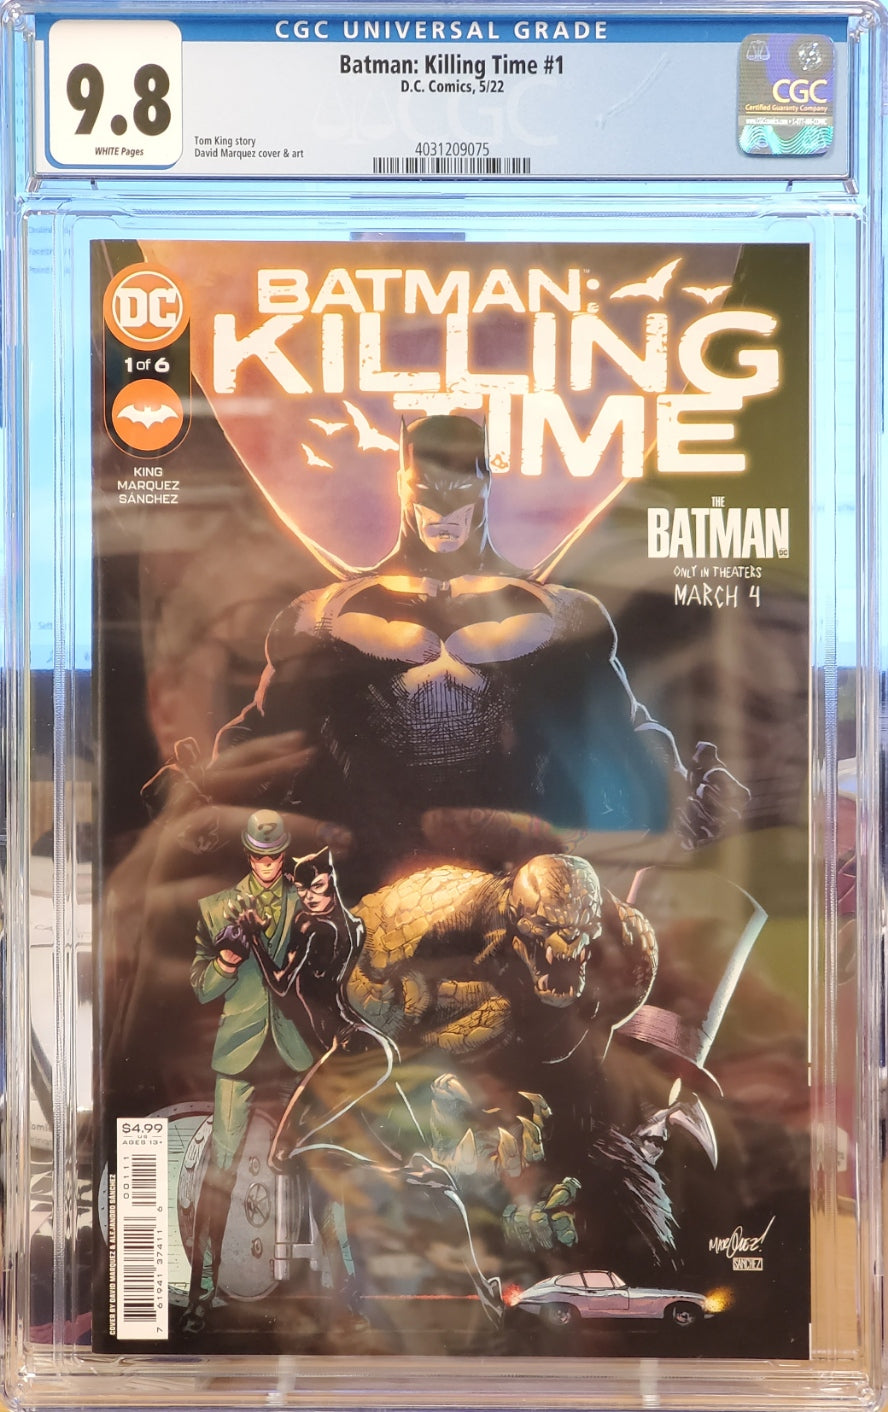 CGC 9.8 - Batman Killing Time #1